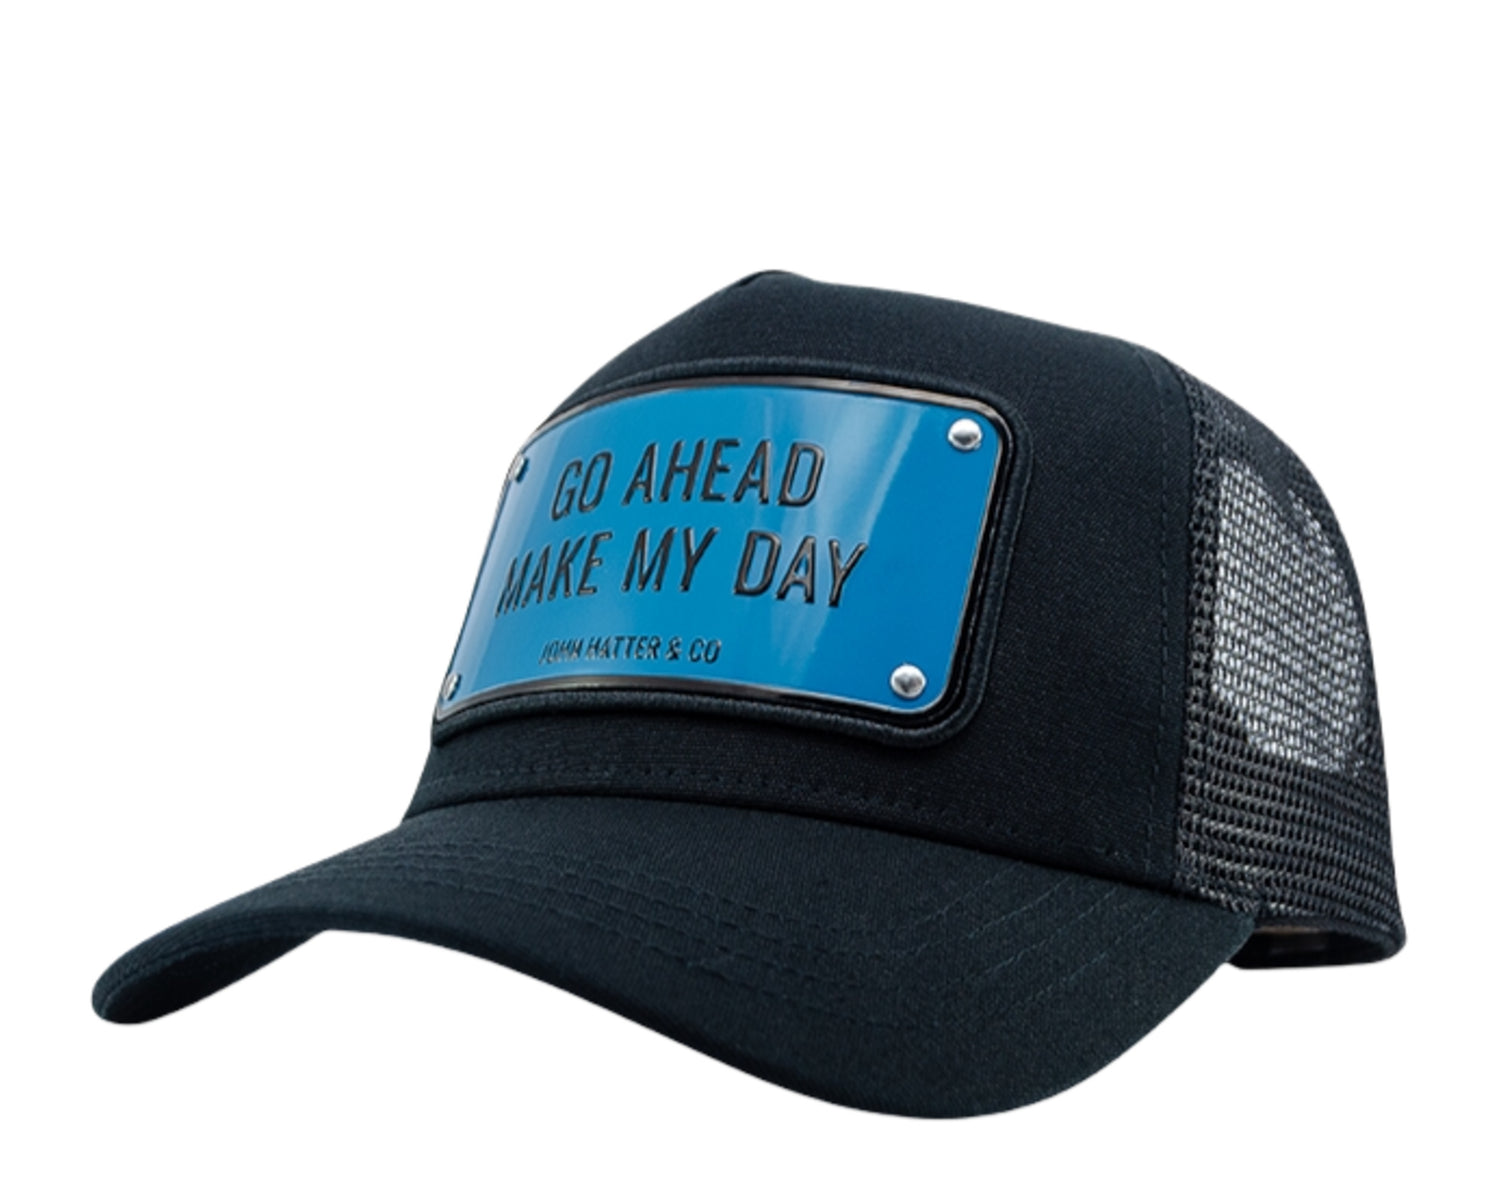 John Hatter & Co Go Ahead Make My Day Trucker Hat